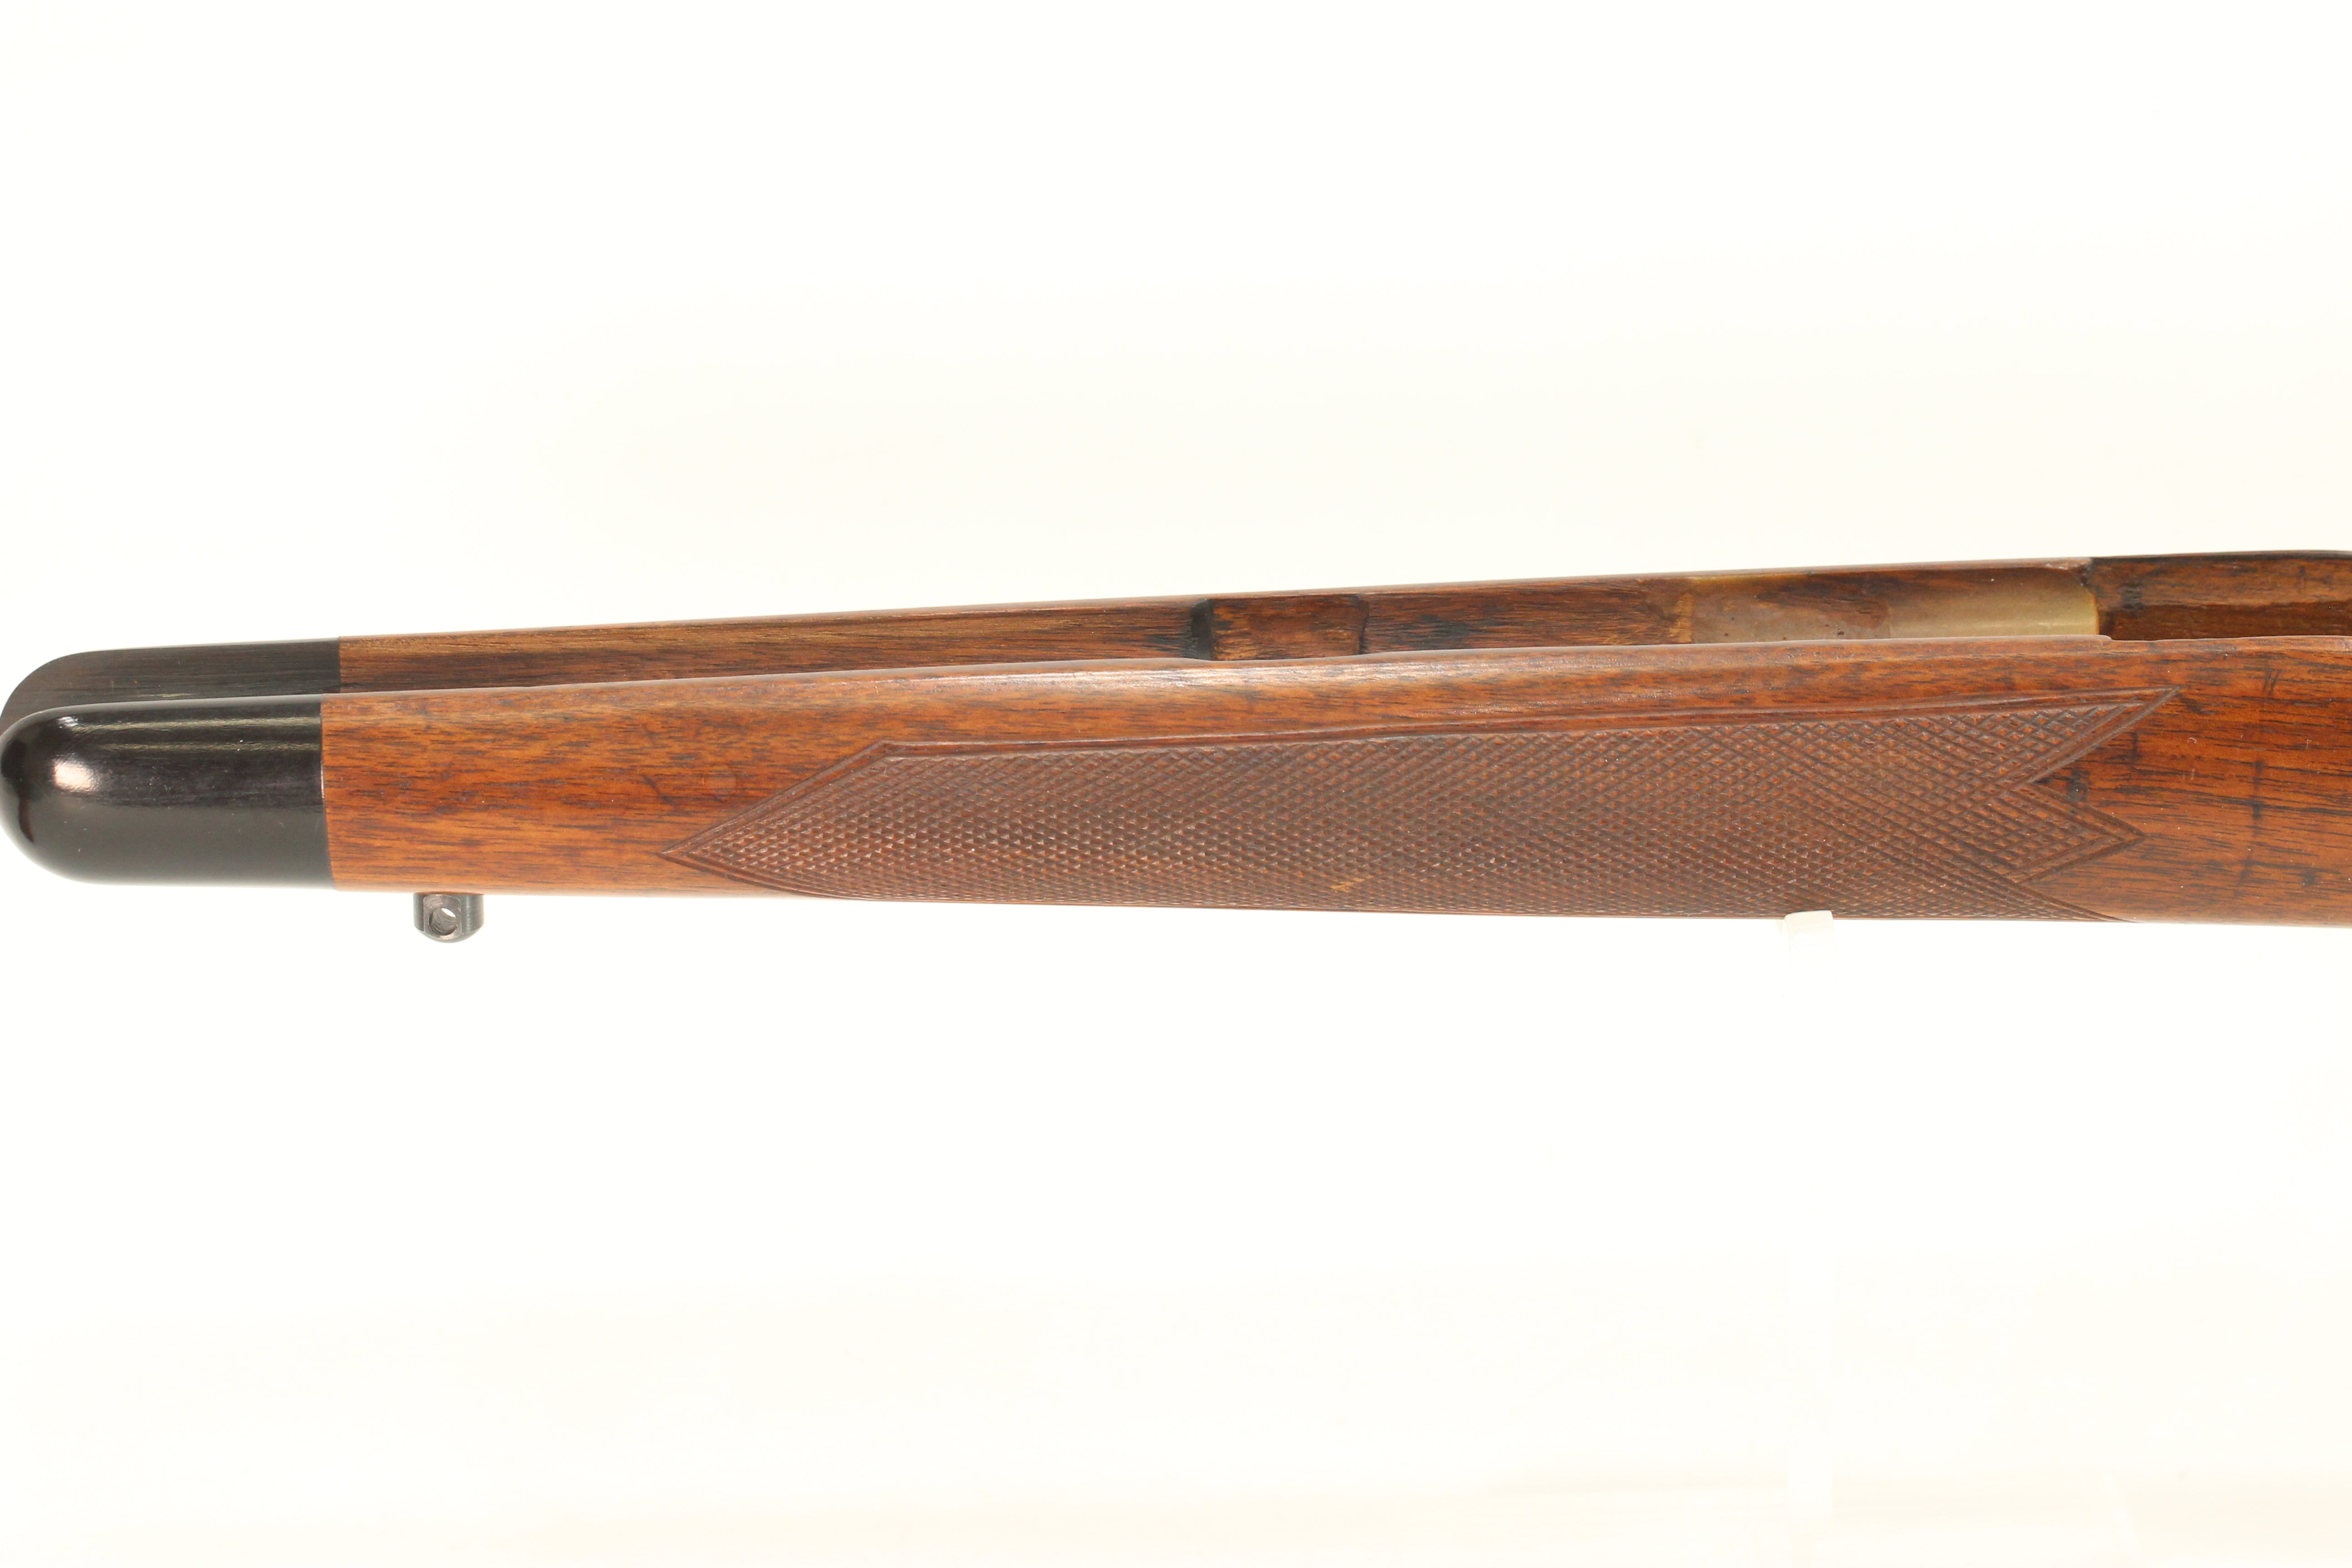 Customized Stock - Post-War Standard Rifle